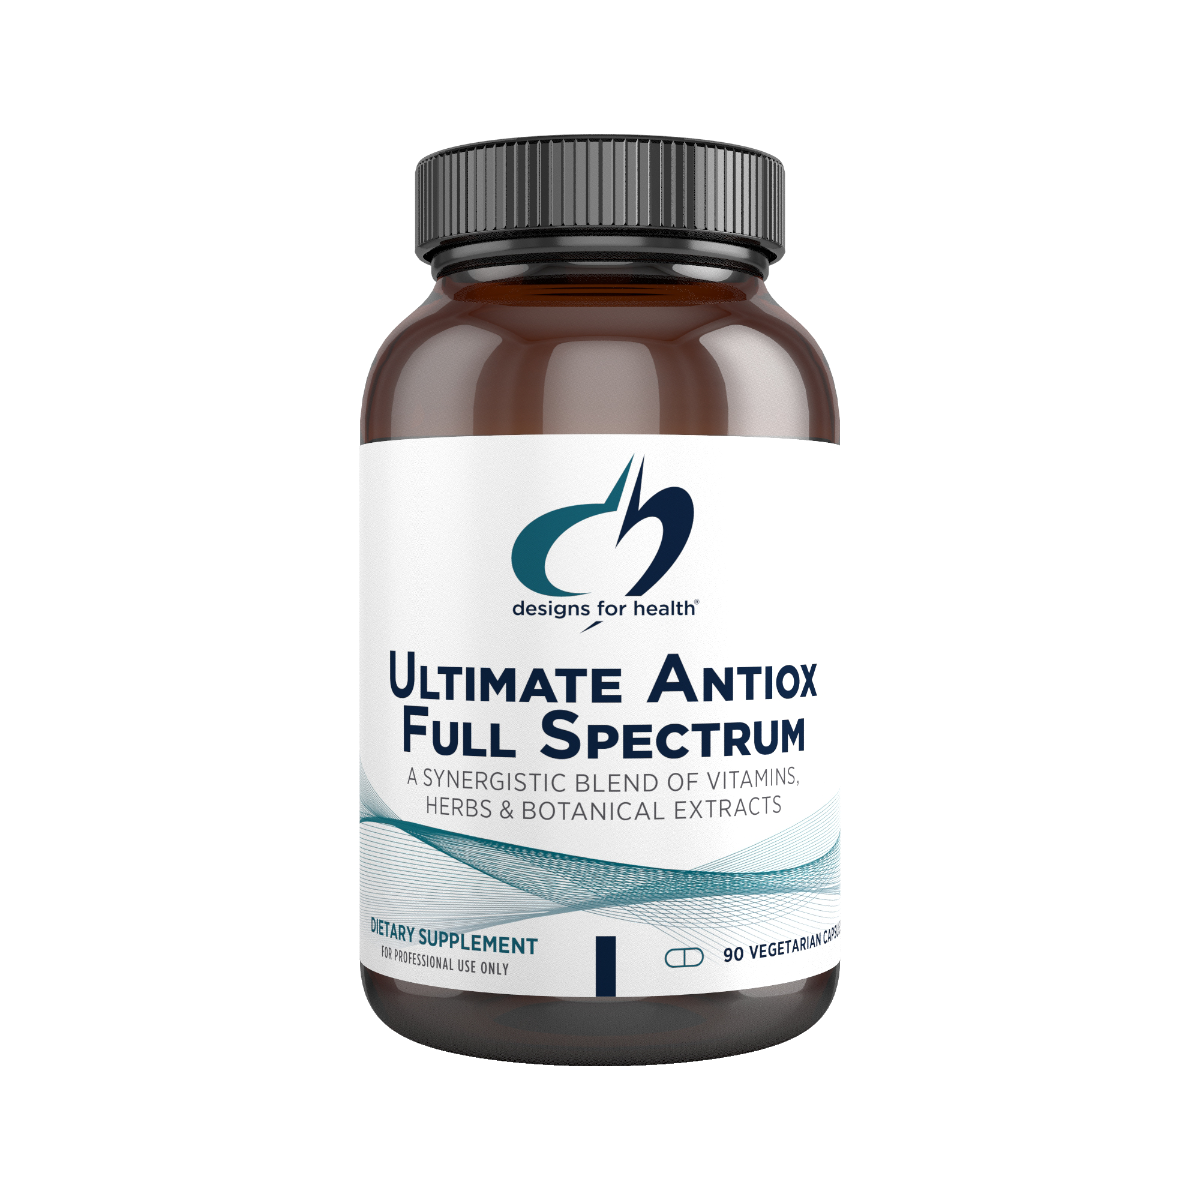 Ultimate Antiox Full Spectrum - Designs for Health (DFH)